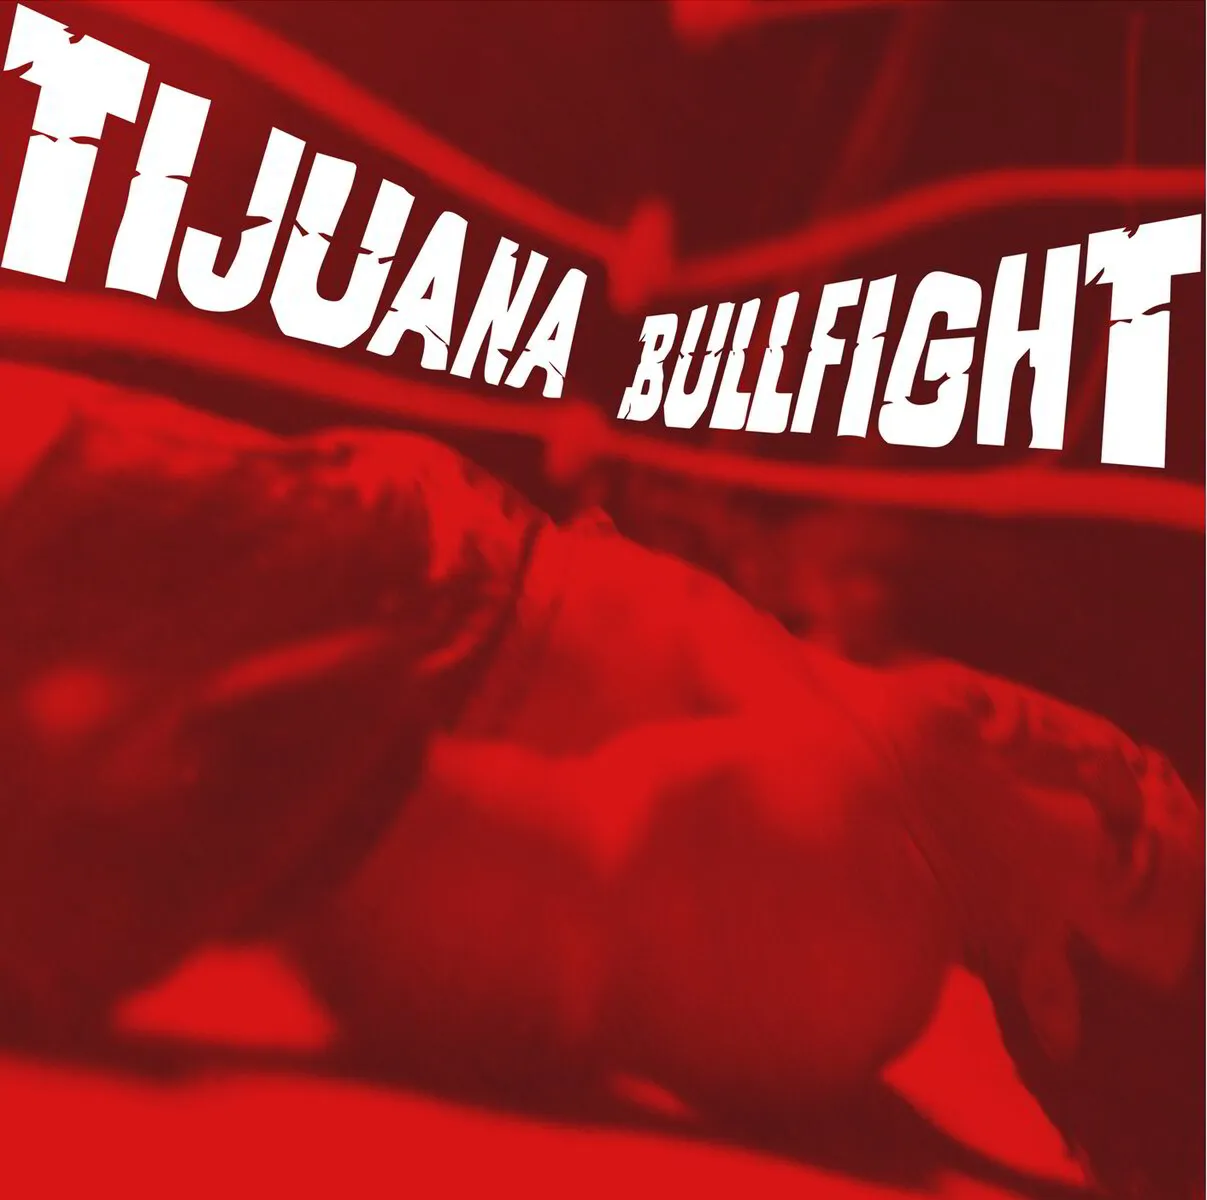 Tijuana Bullfight - Self-Titled Debut Album